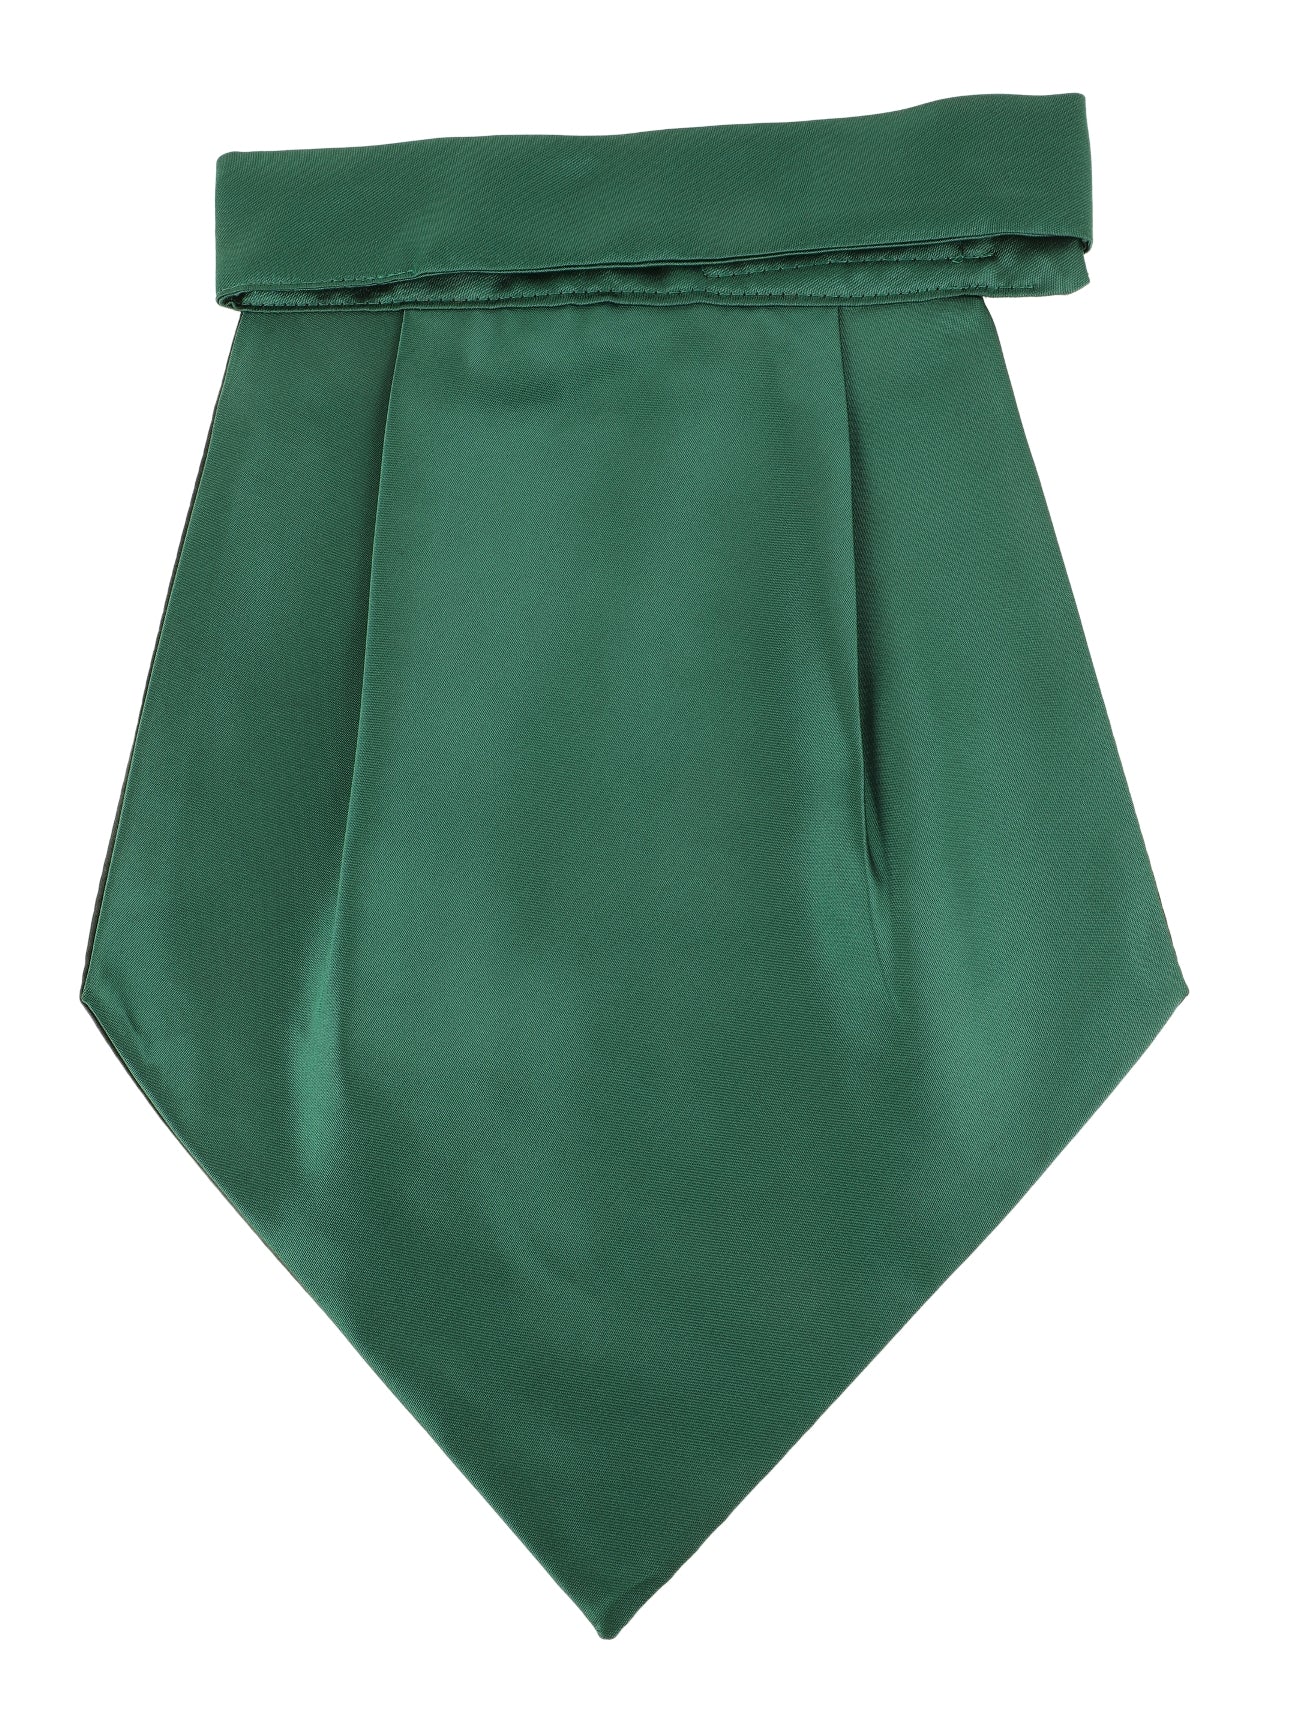 Alvaro Castagnino Men's Green Color Microfiber Cravat